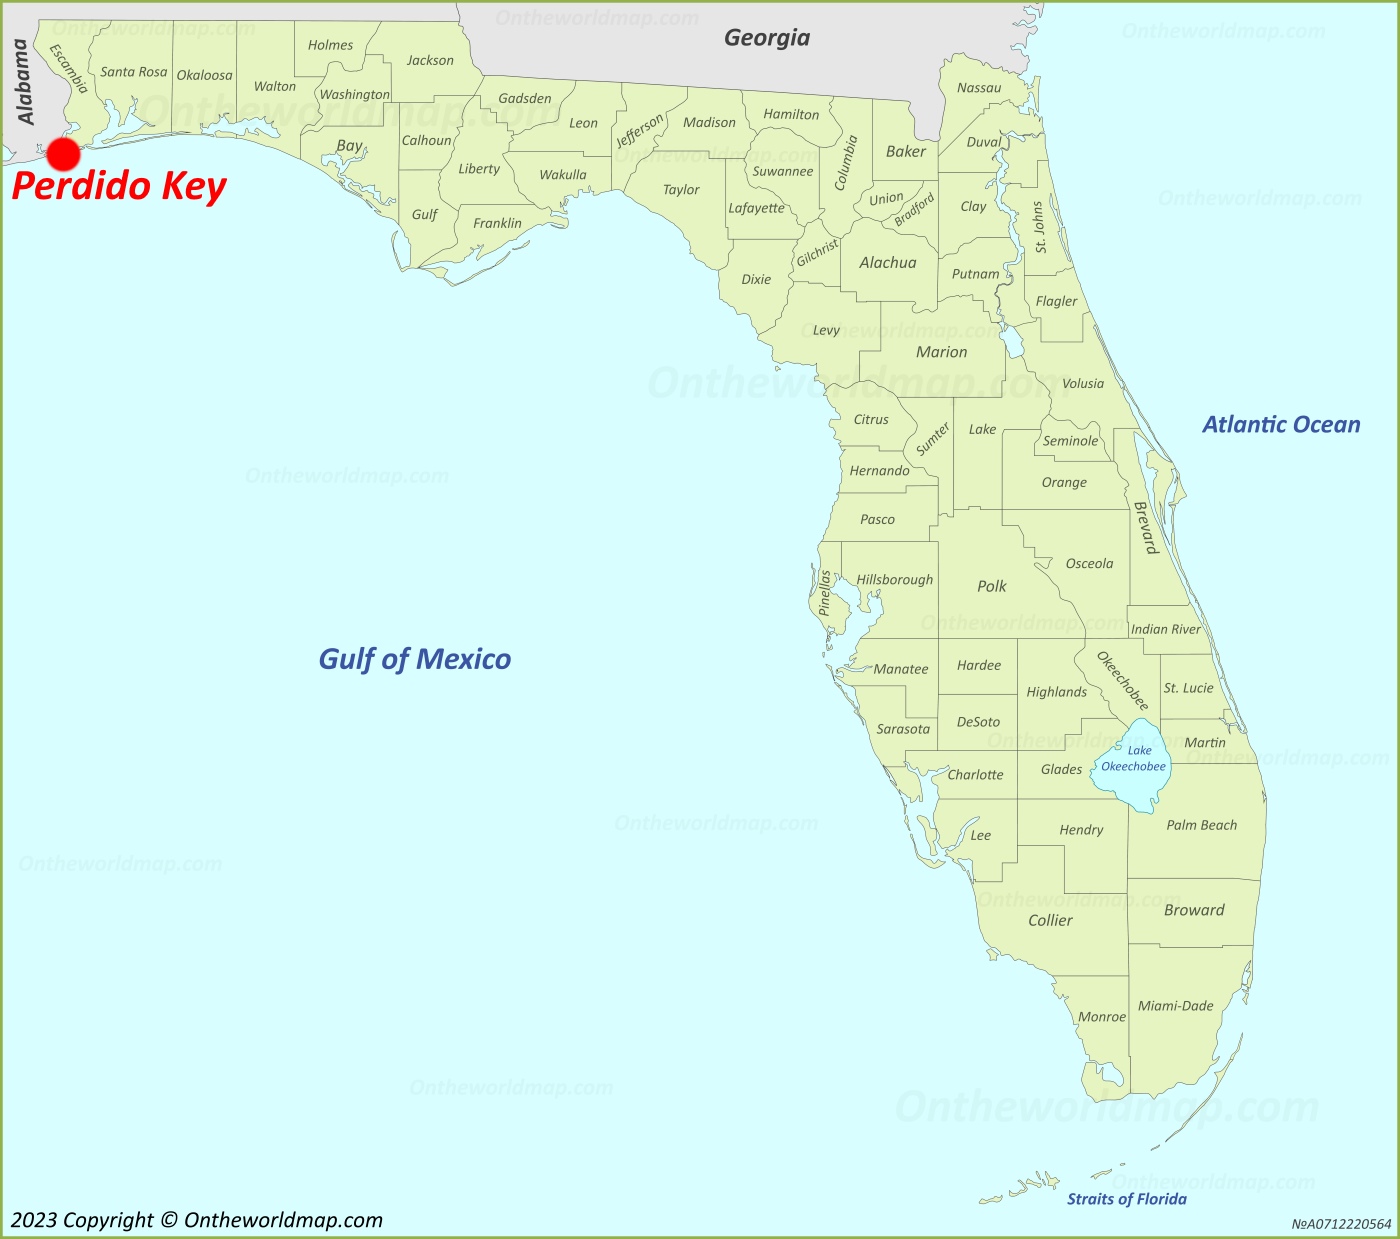 Perdido Key Location On The Florida Map